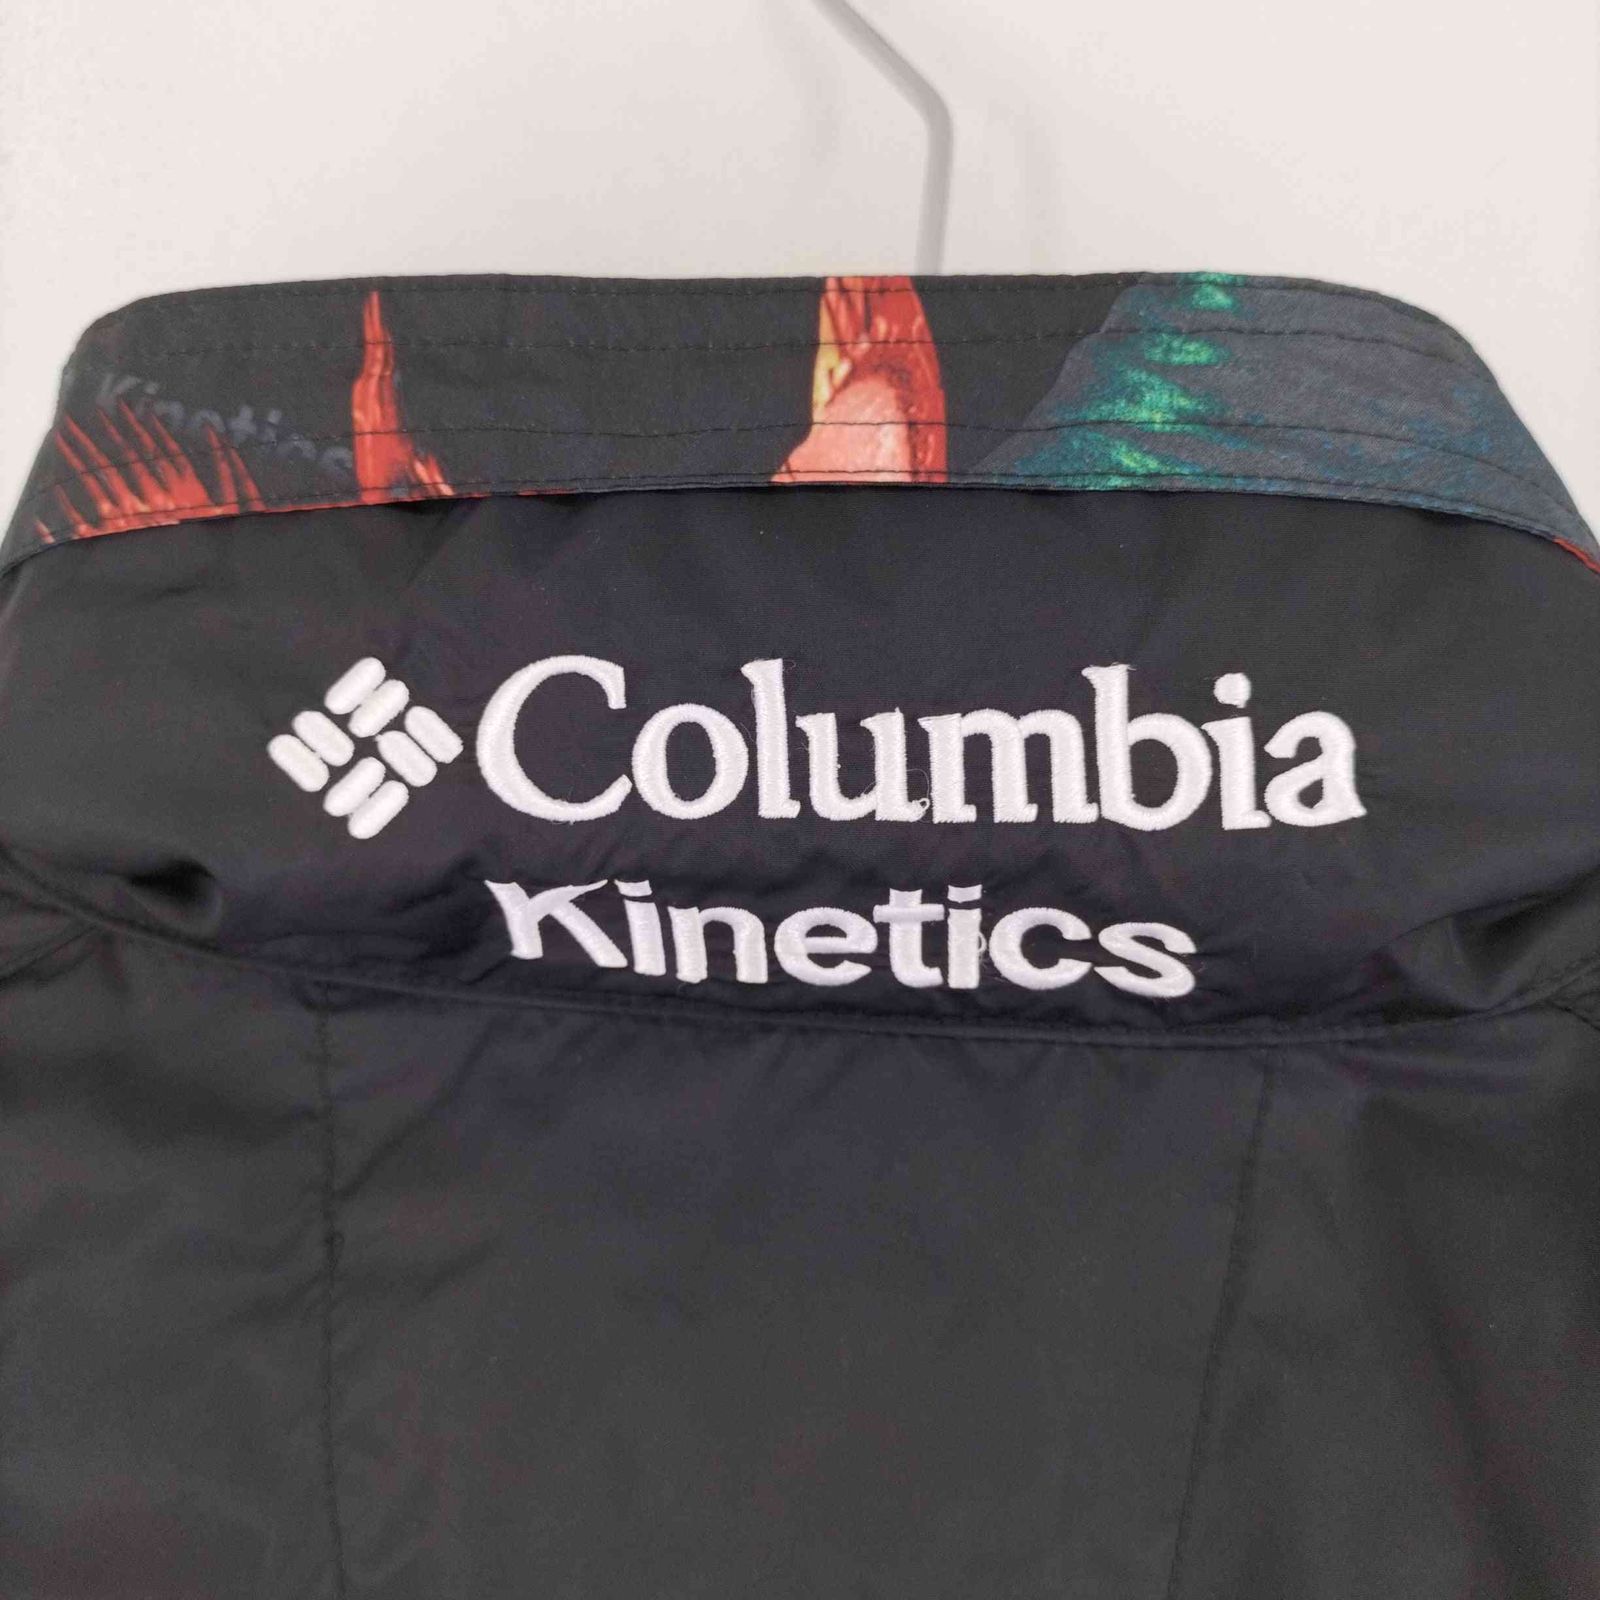 Columbia Sportswear Men's Watertight II Jacket at Tractor Supply Co.